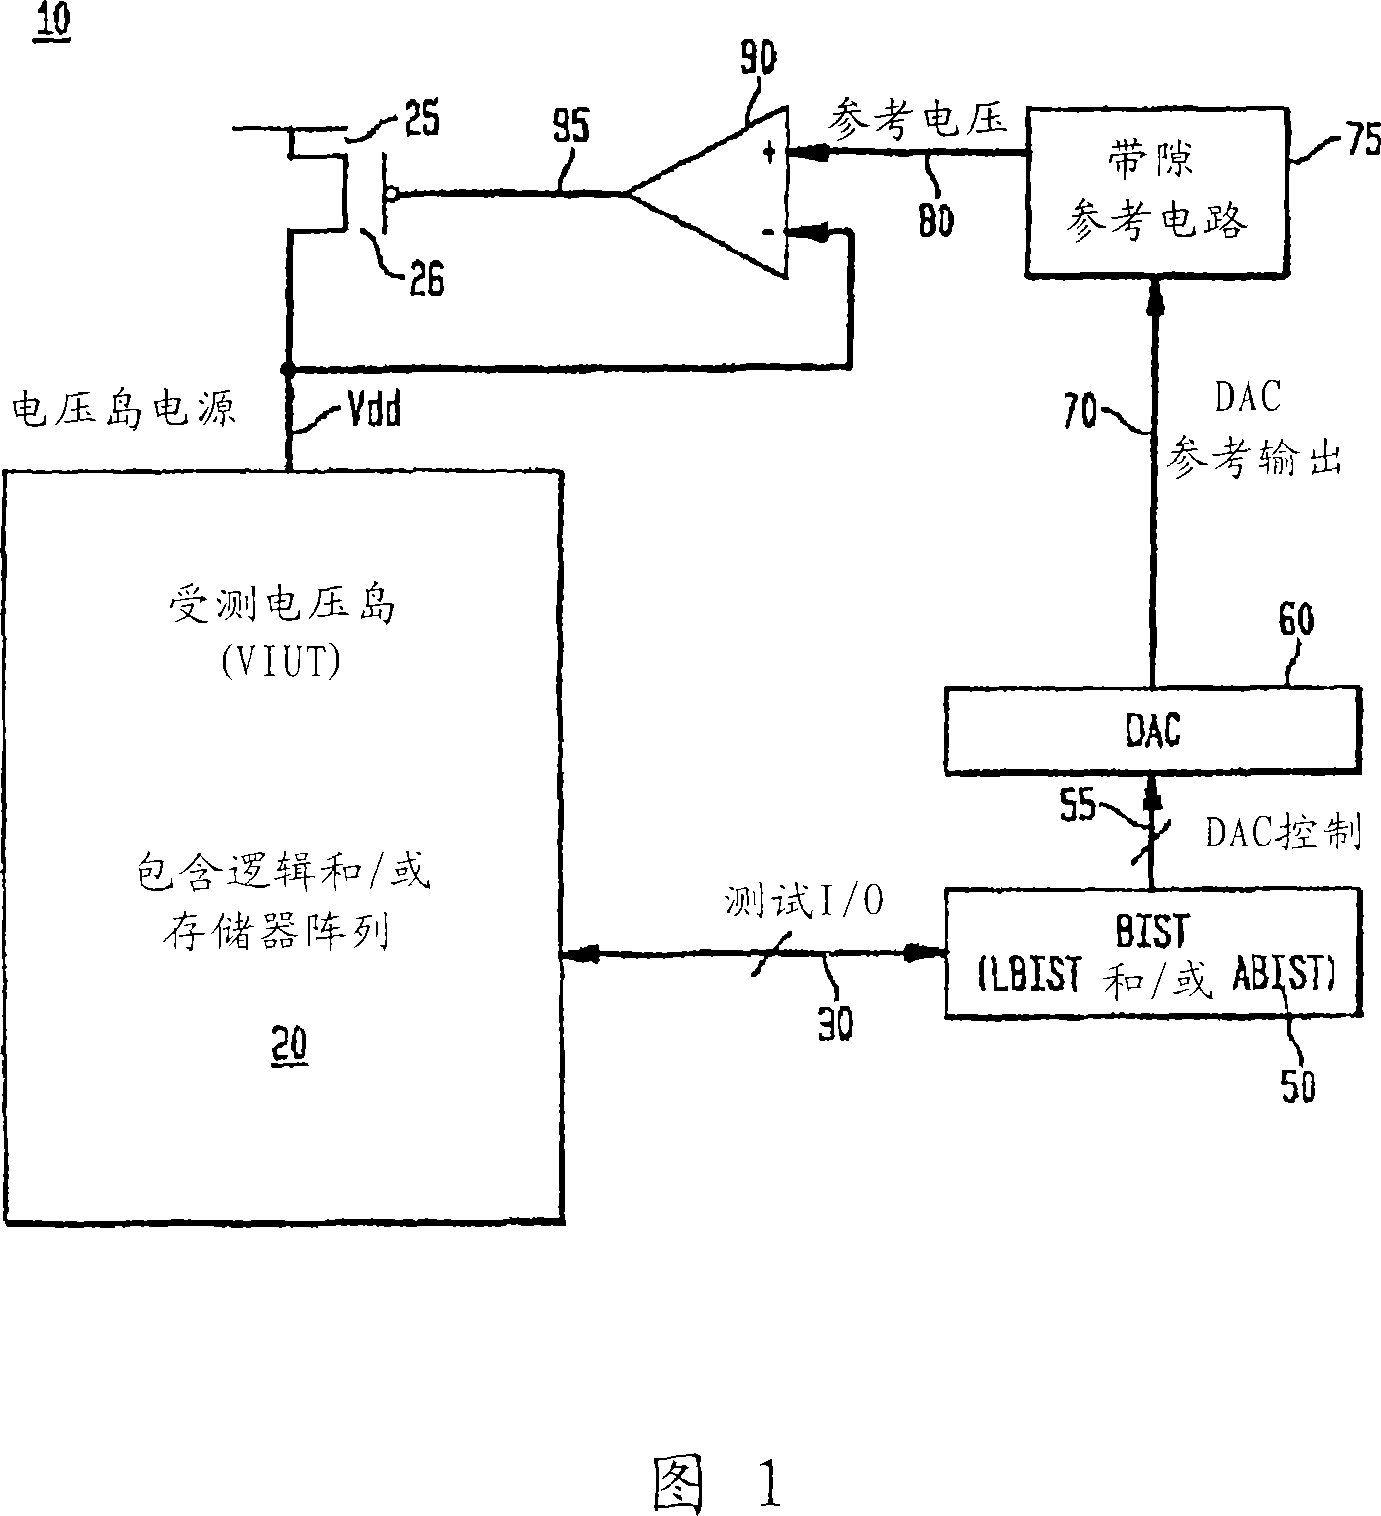 Self-test circuitry to determine minimum operating voltage